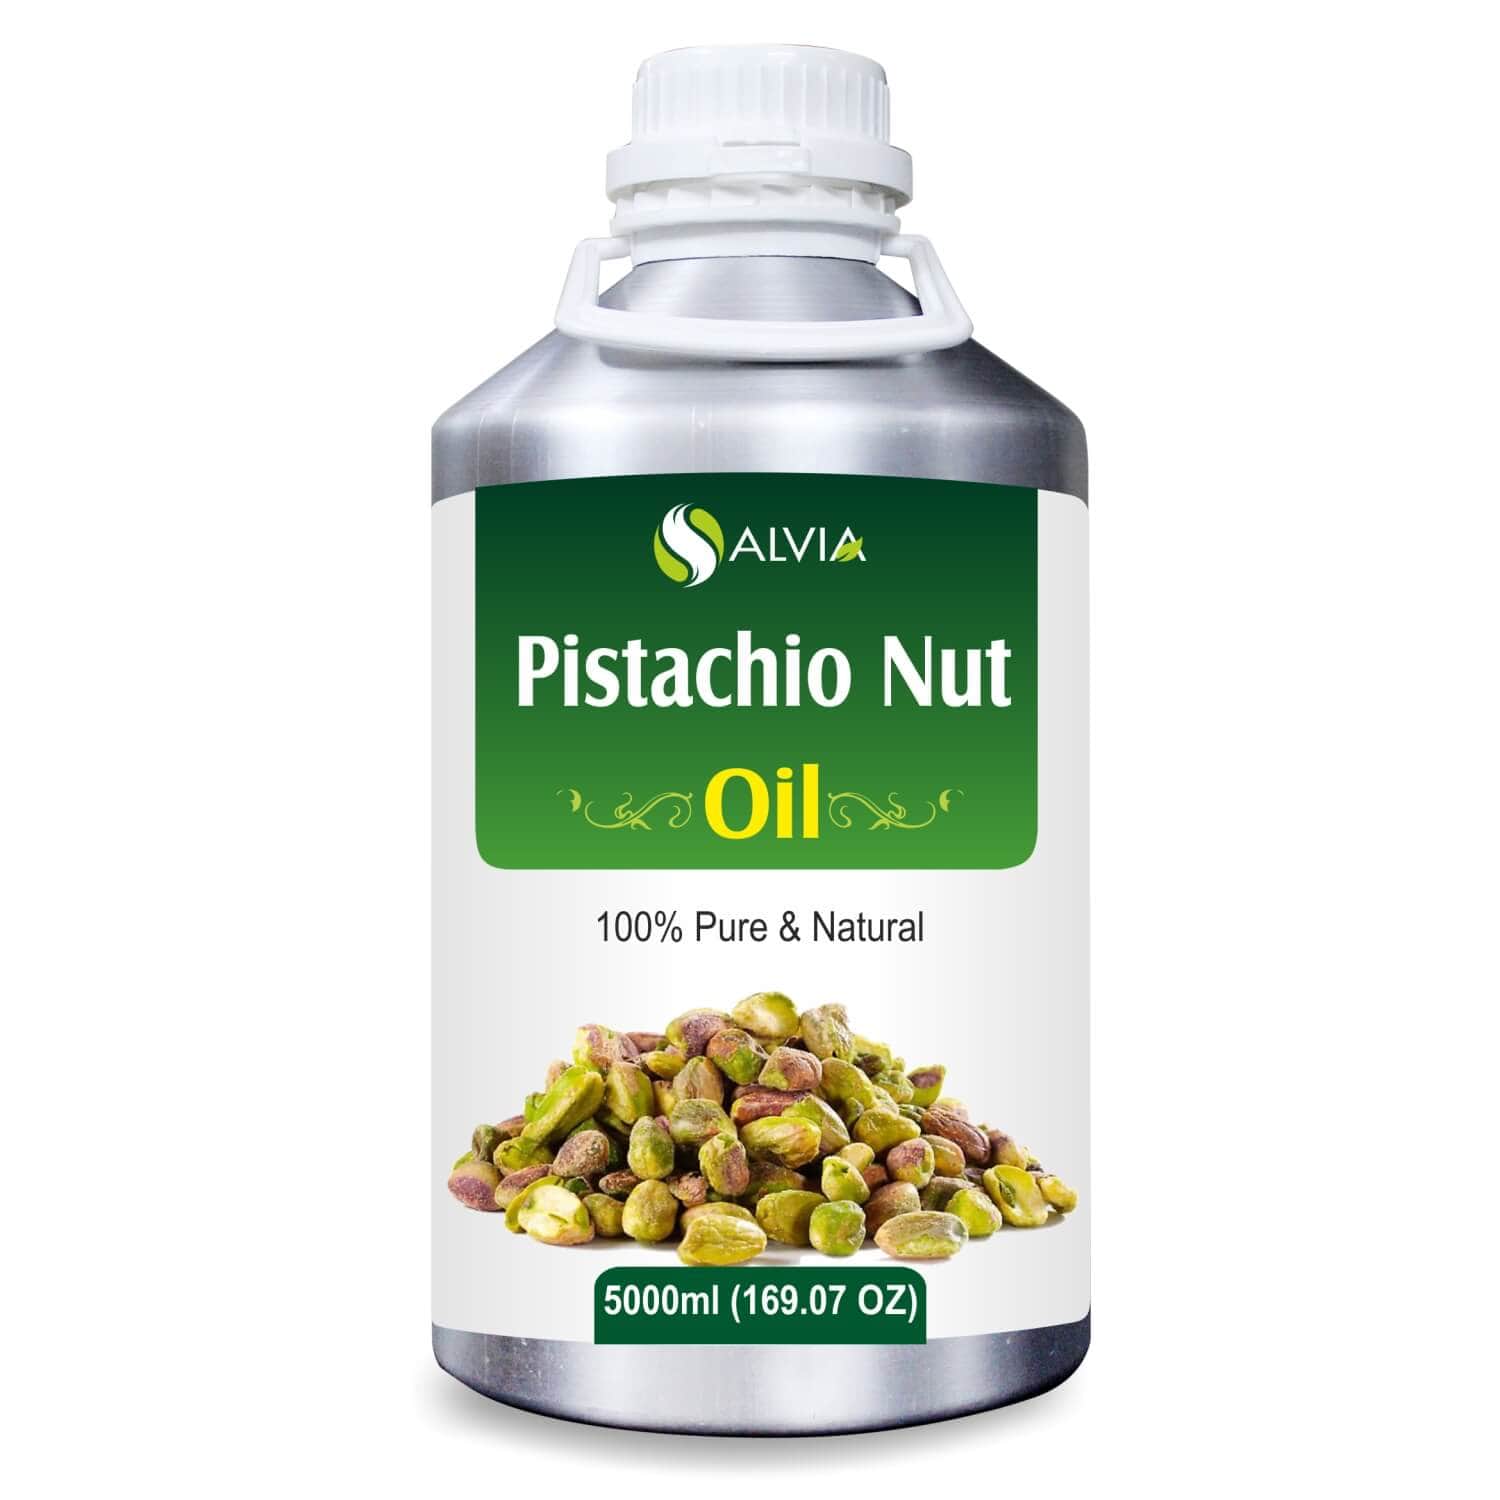 Salvia Natural Carrier Oils, Hair Fall,Anti Ageing,Anti-ageing Oil 5000ml Pistachio Nut Oil (Pistacia Vera) Pure Natural Carrier Oil